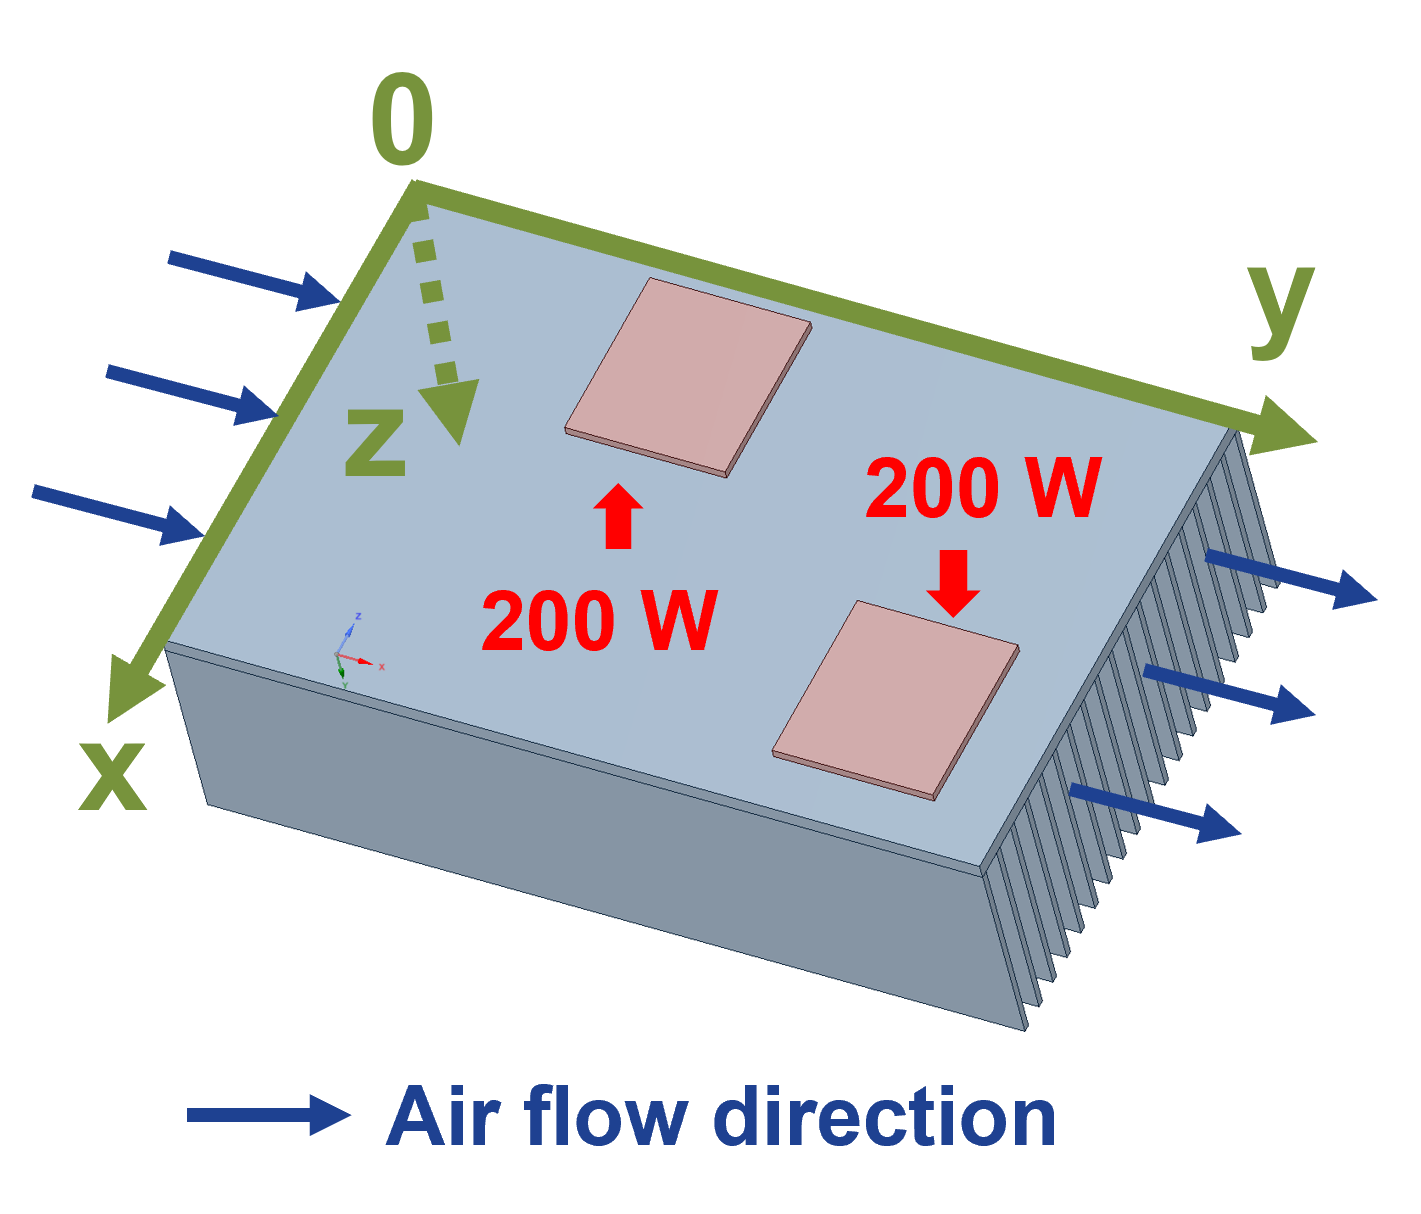 Air flow direction across heatsink